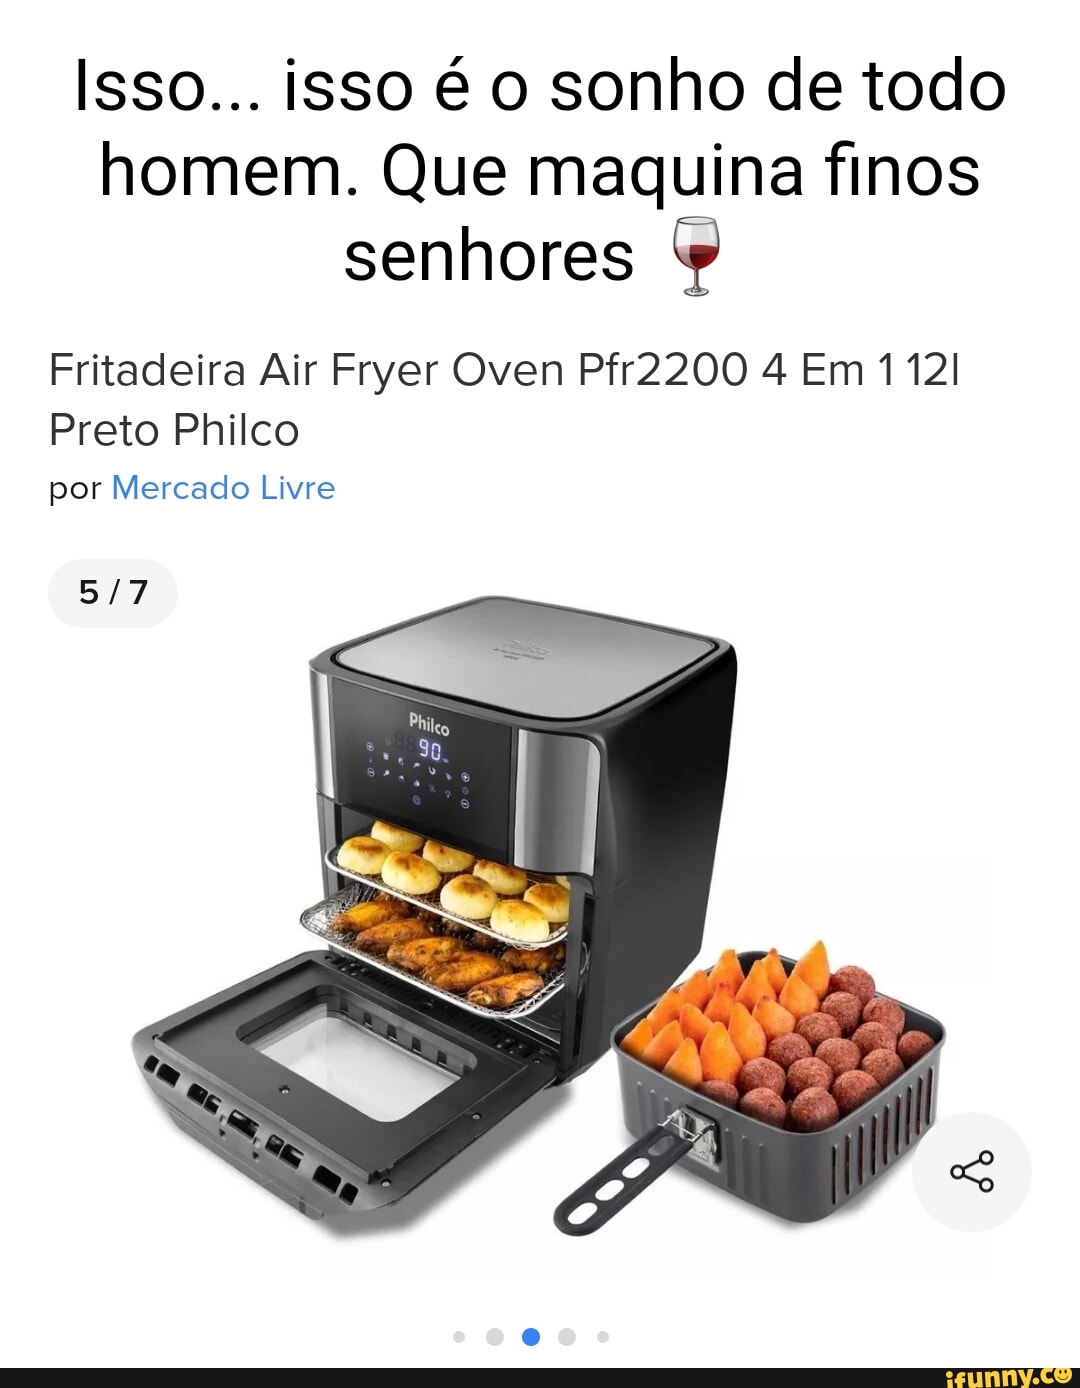 Fino senhores - iFunny Brazil